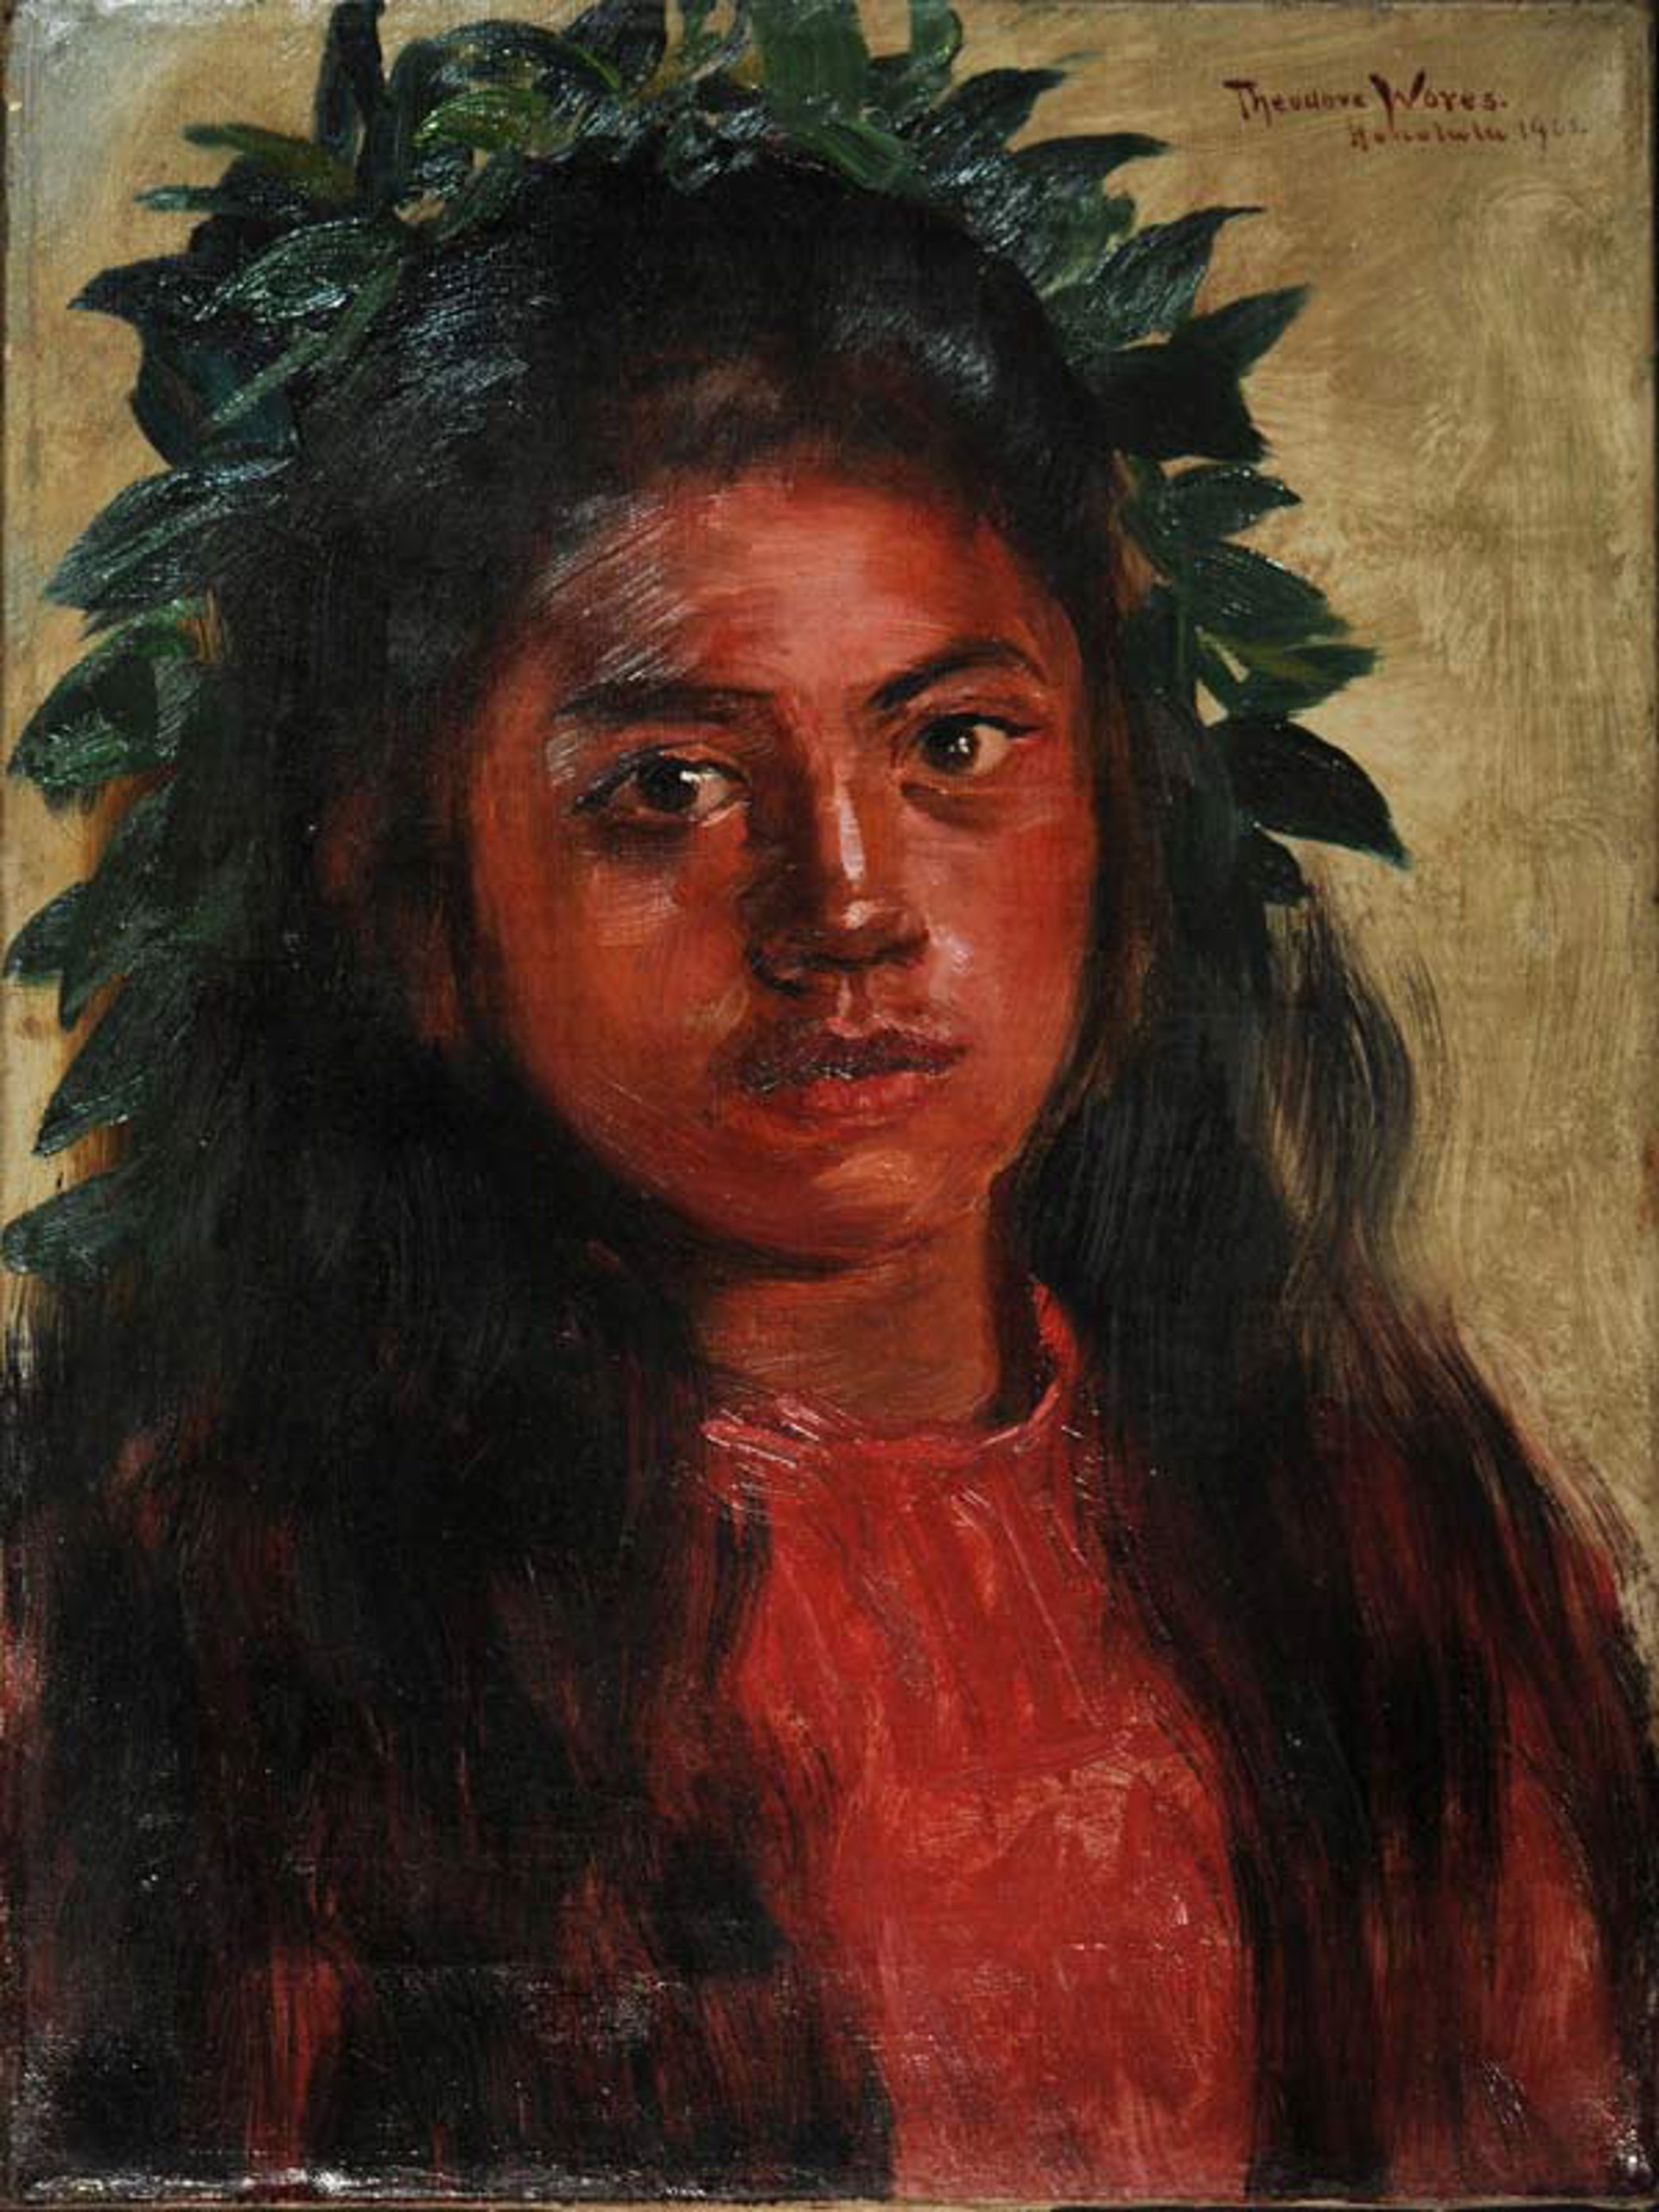 Hawaiian Girl by Theodore Wores